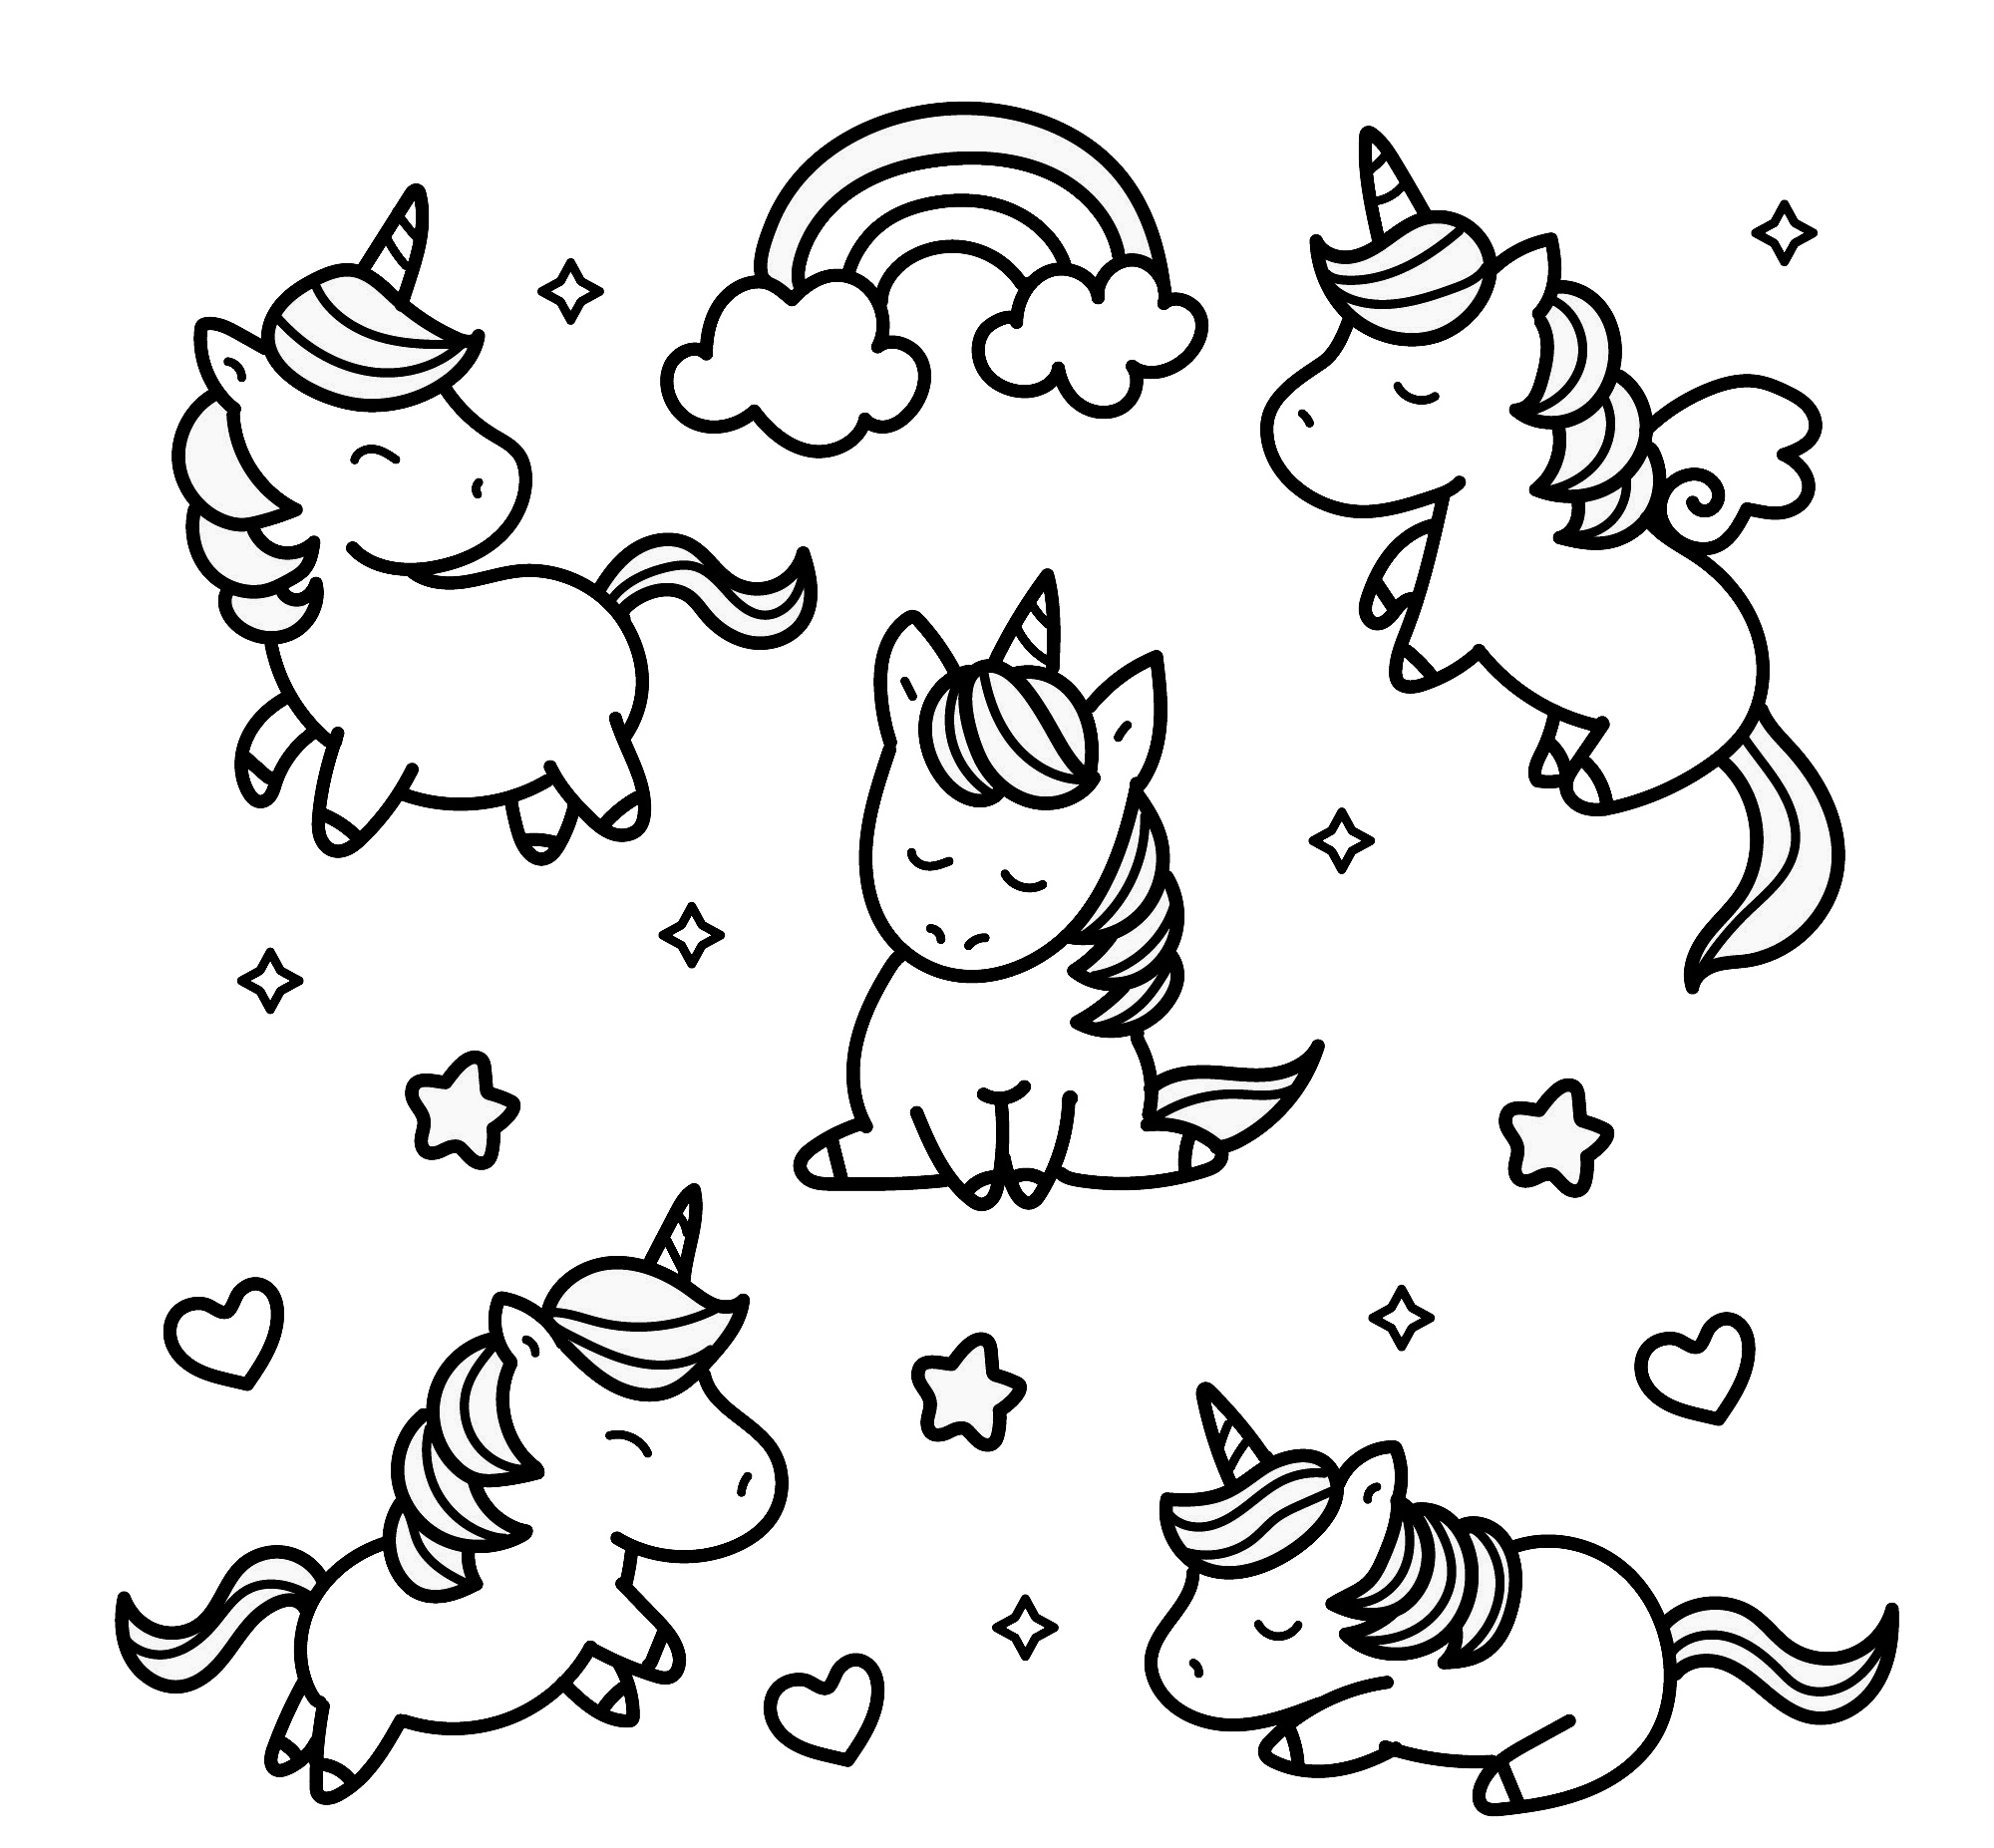 unicorn coloring page free printable